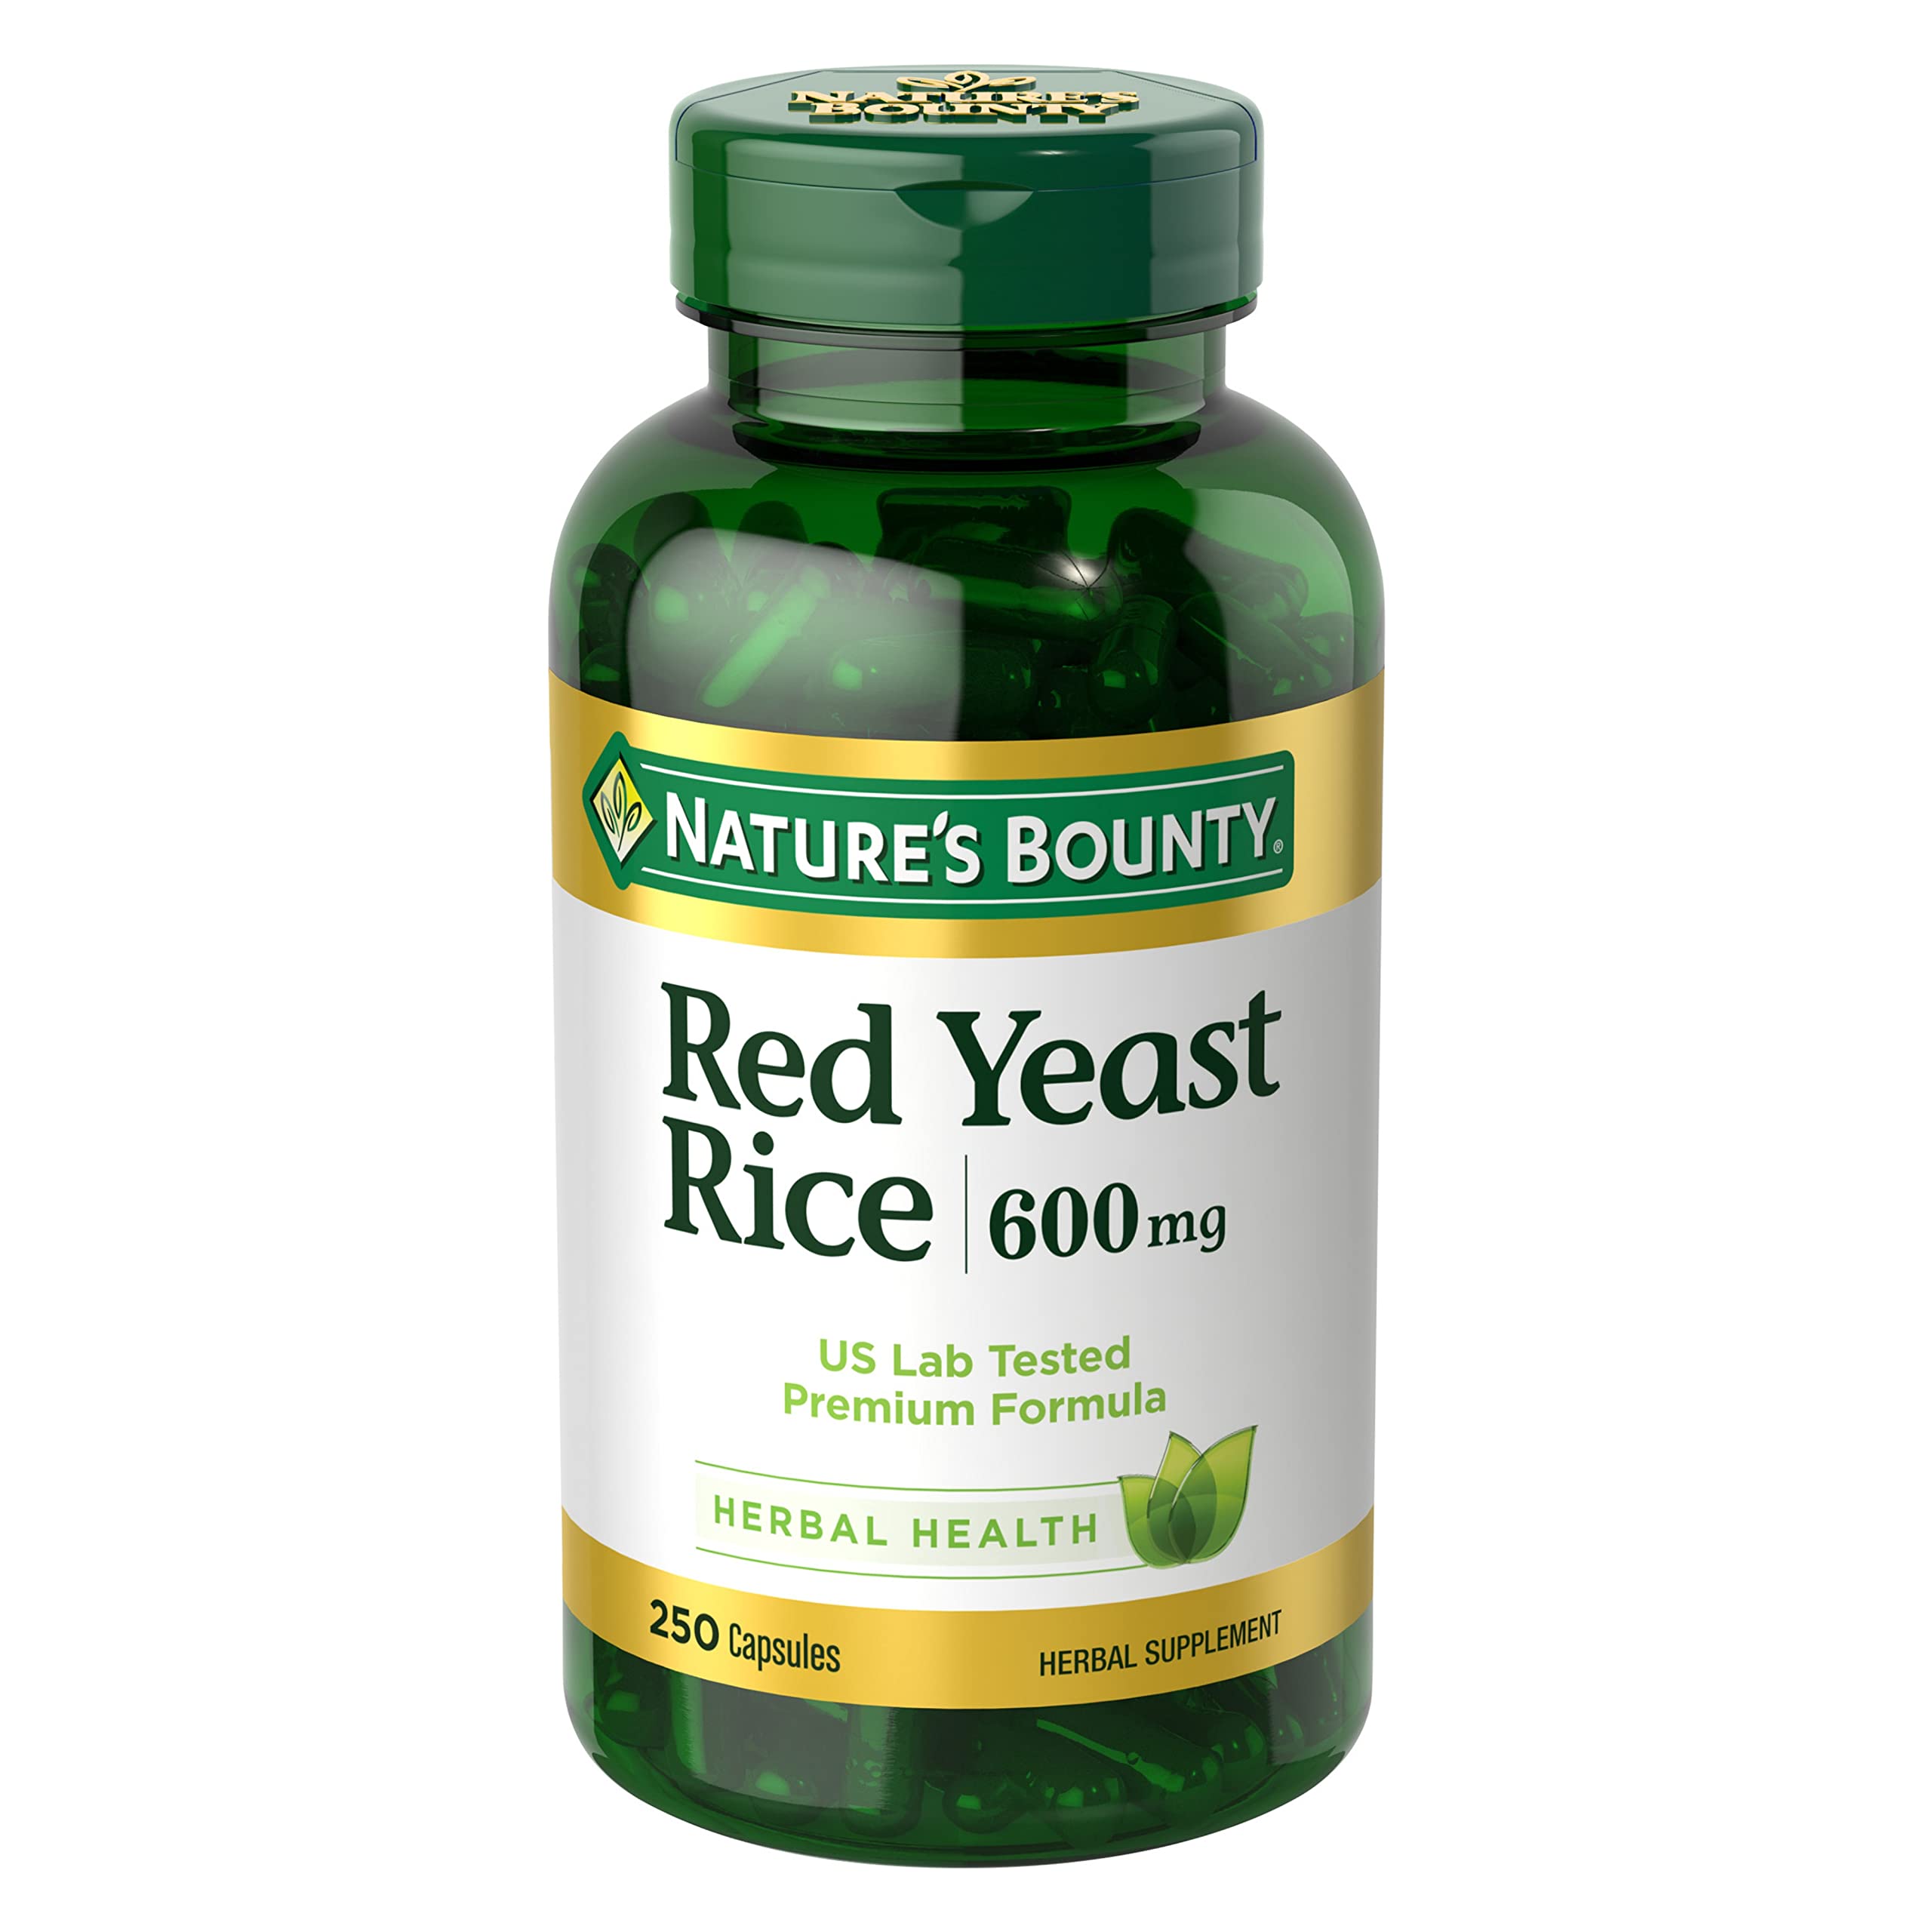 Nature’s Bounty Red Yeast Rice, Herbal Supplement, 600mg, 250 Capsules